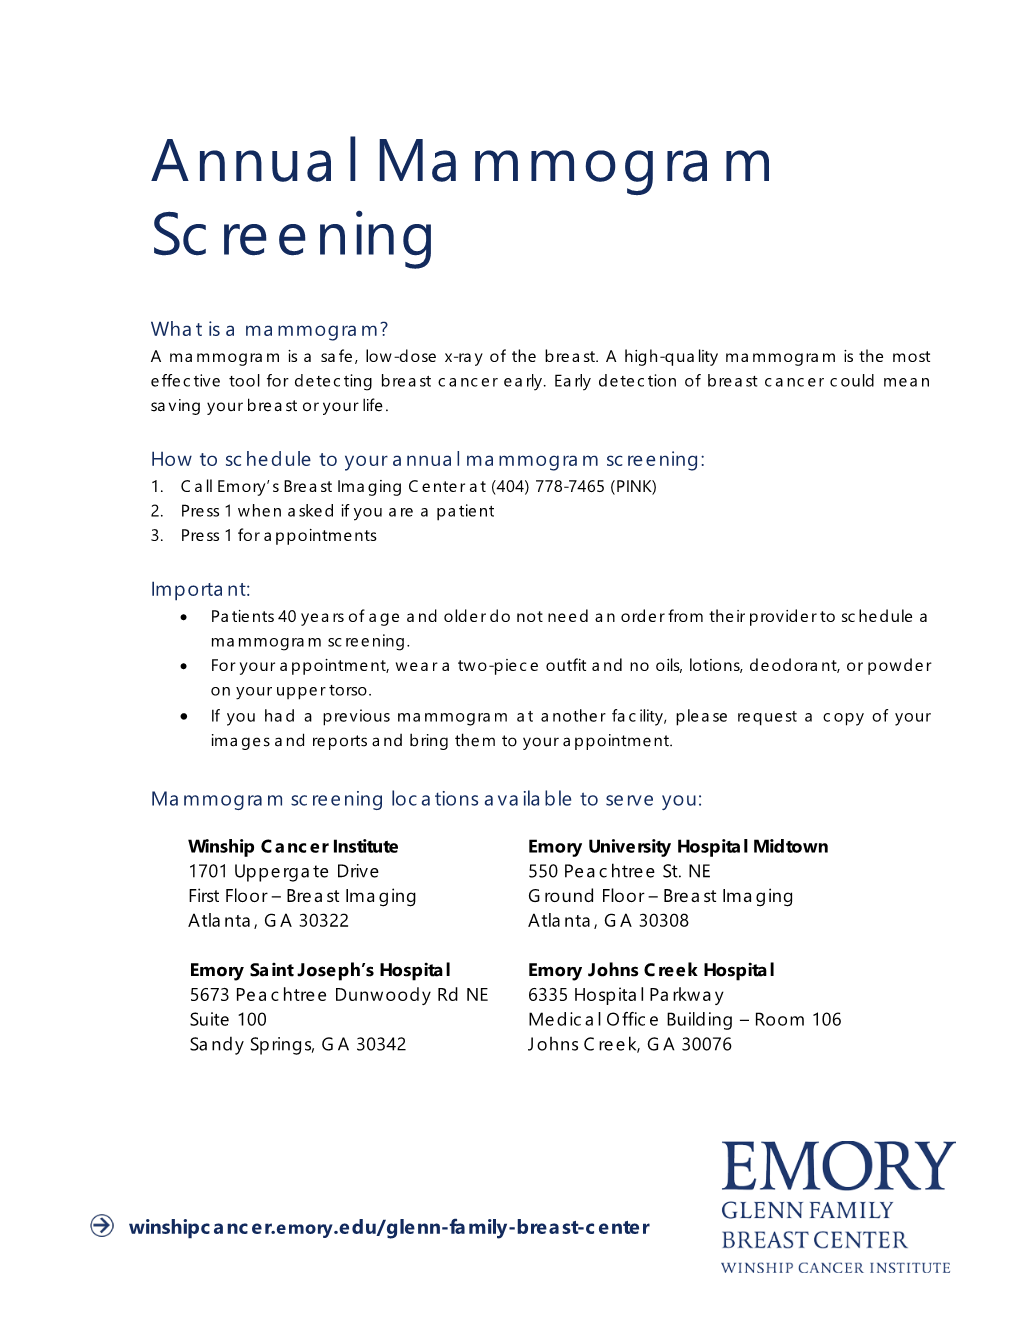 Annual Mammogram Screening